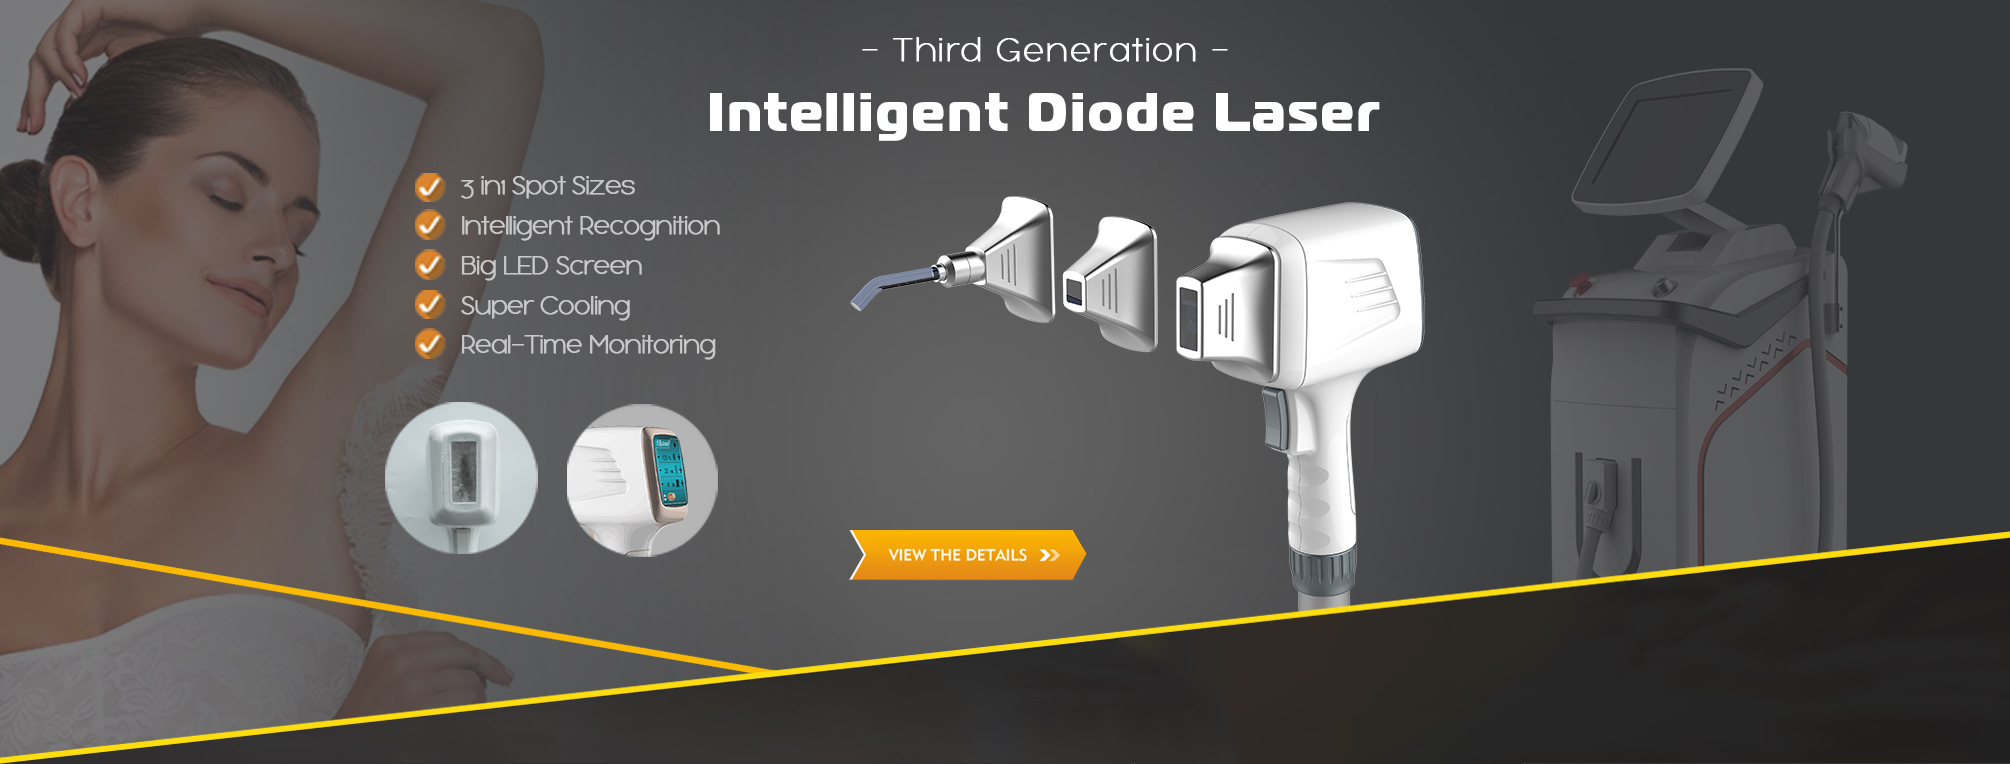 3rd generation intelligent diode laser